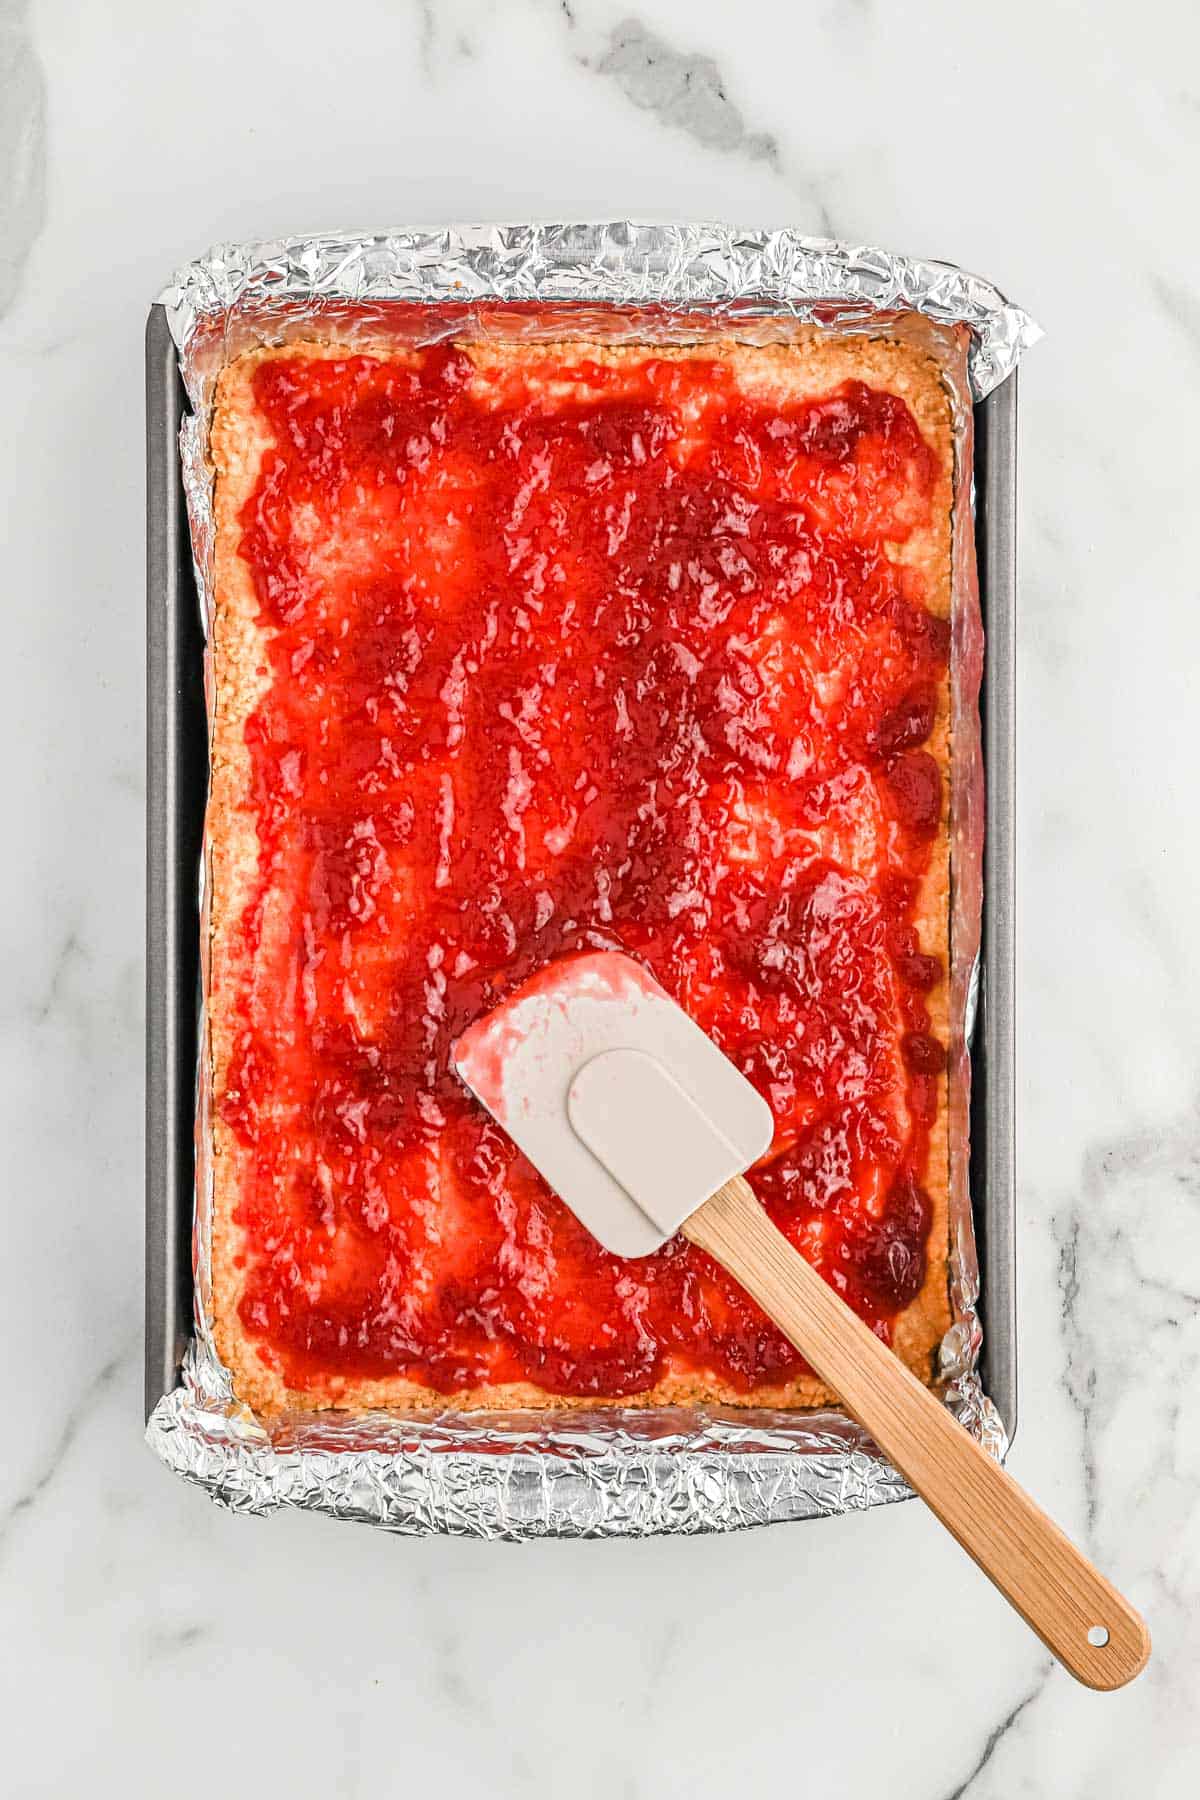 Raspberry jam spread over the top of the crust.